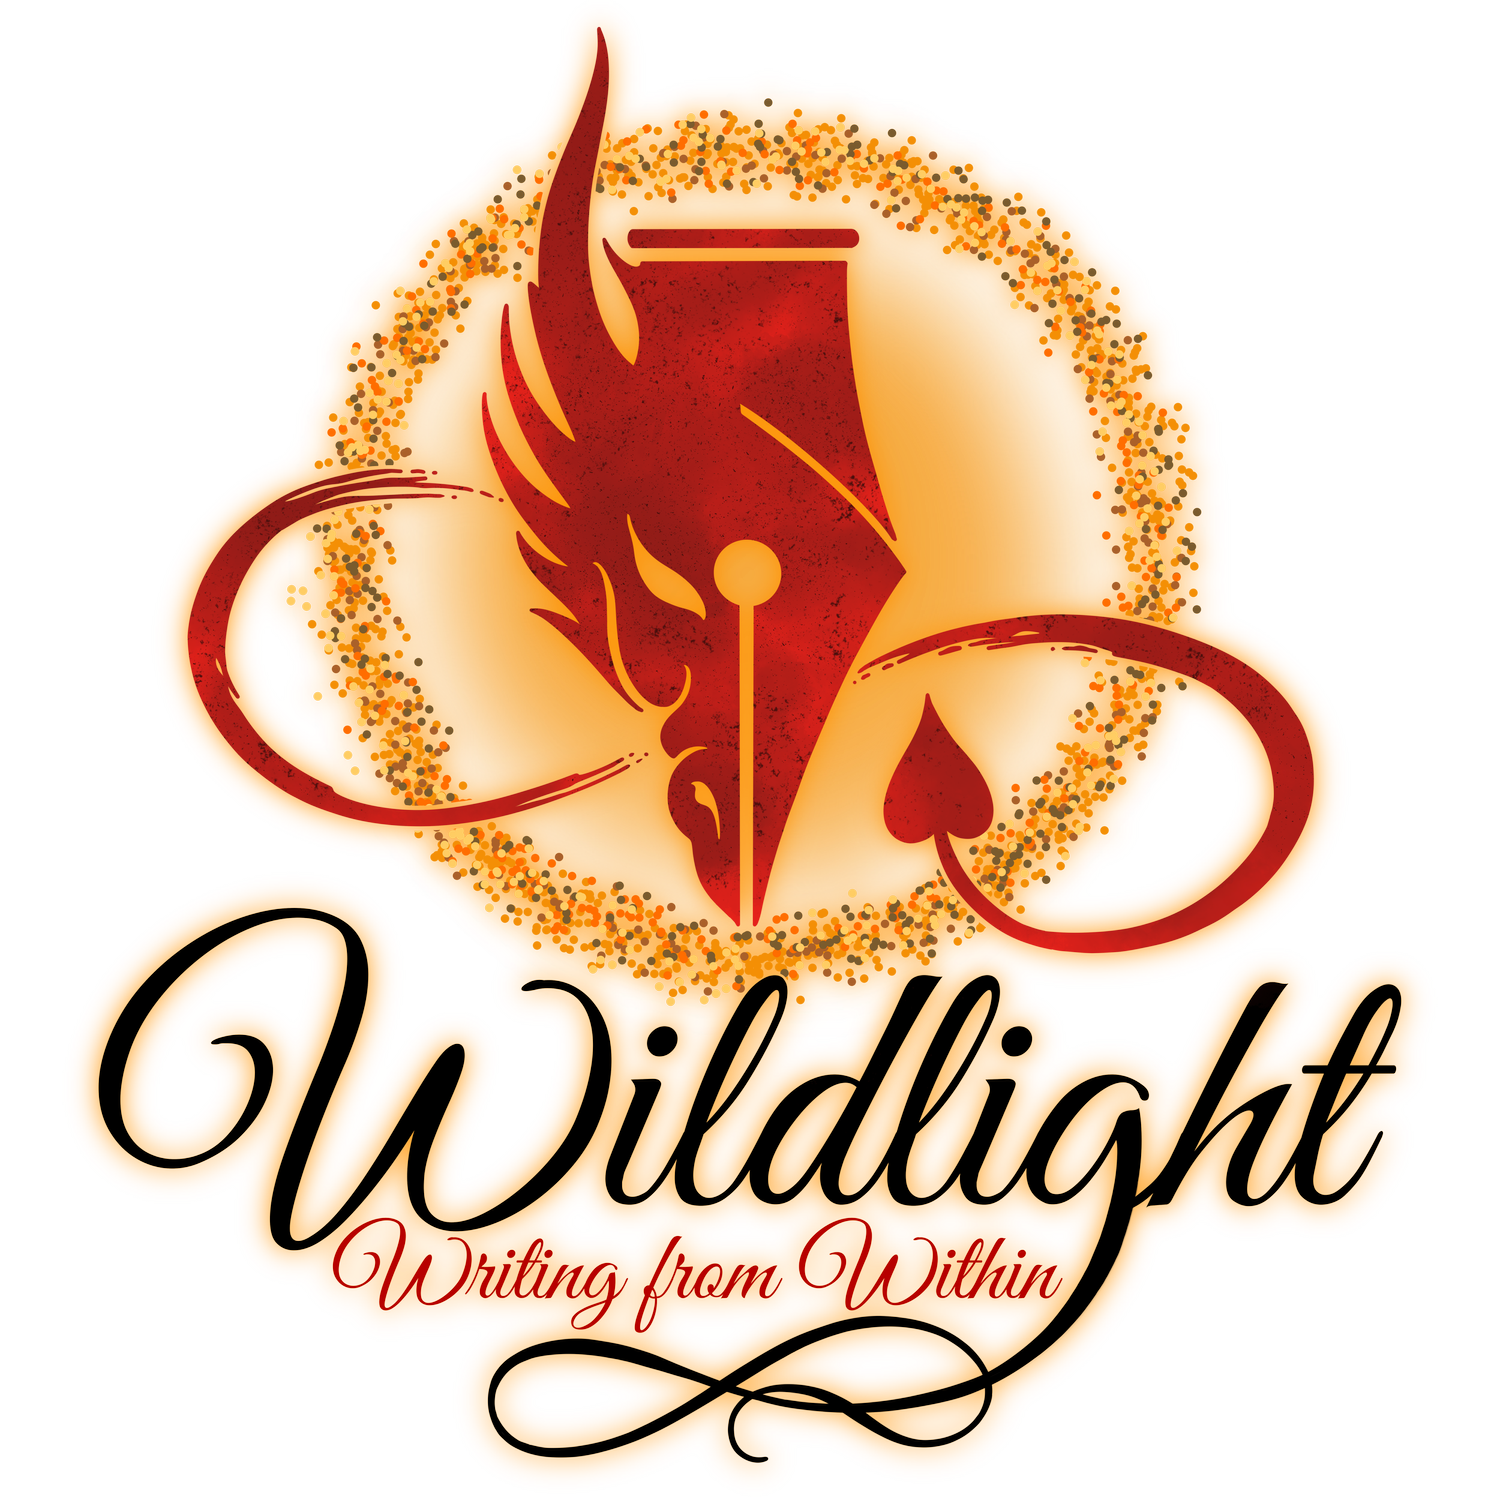 Wildlight